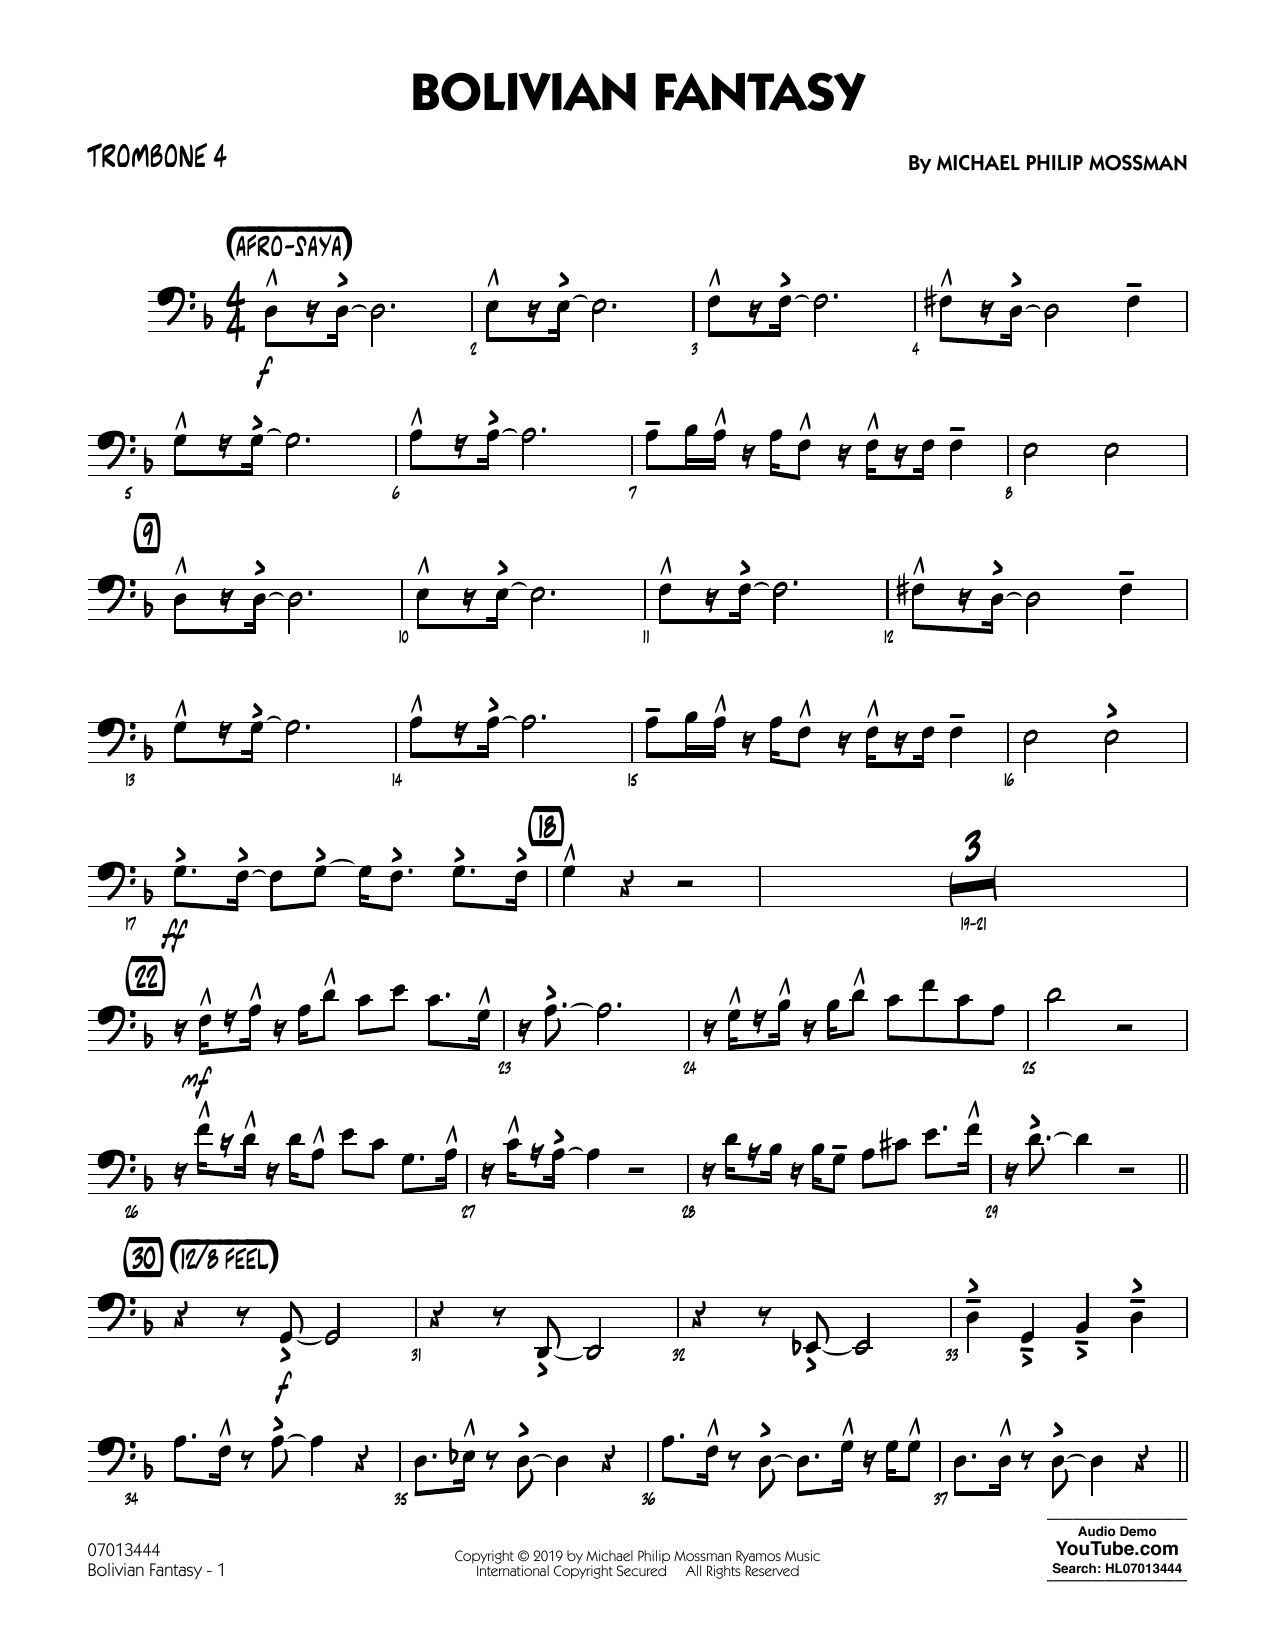 Michael Philip Mossman Bolivian Fantasy - Trombone 4 Sheet Music Notes & Chords for Jazz Ensemble - Download or Print PDF